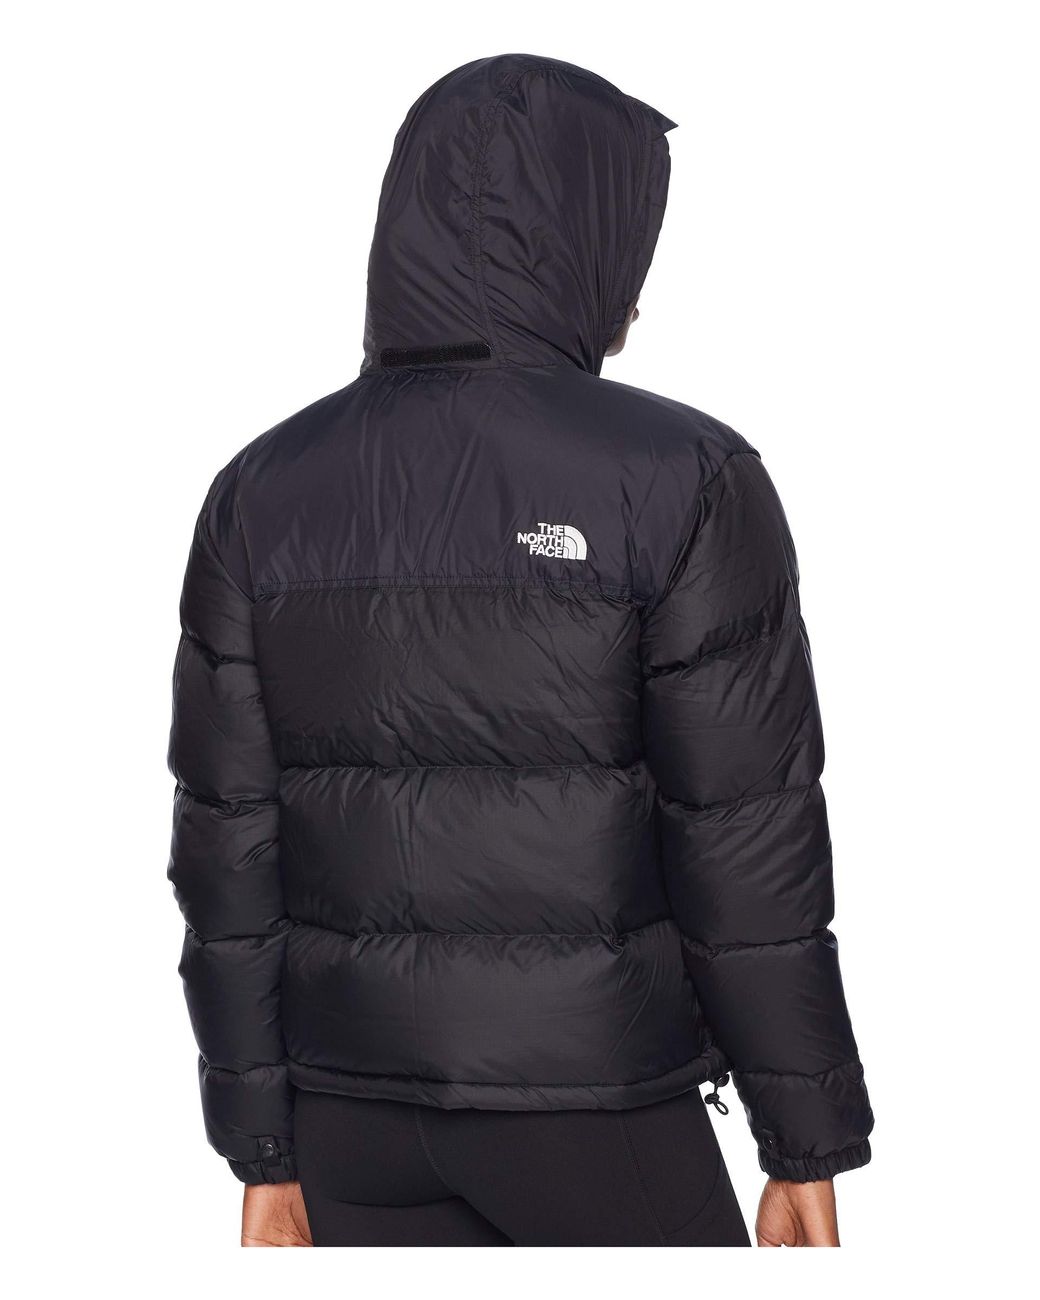 The North Face 1996 Retro Nuptse Jacket in Black | Lyst